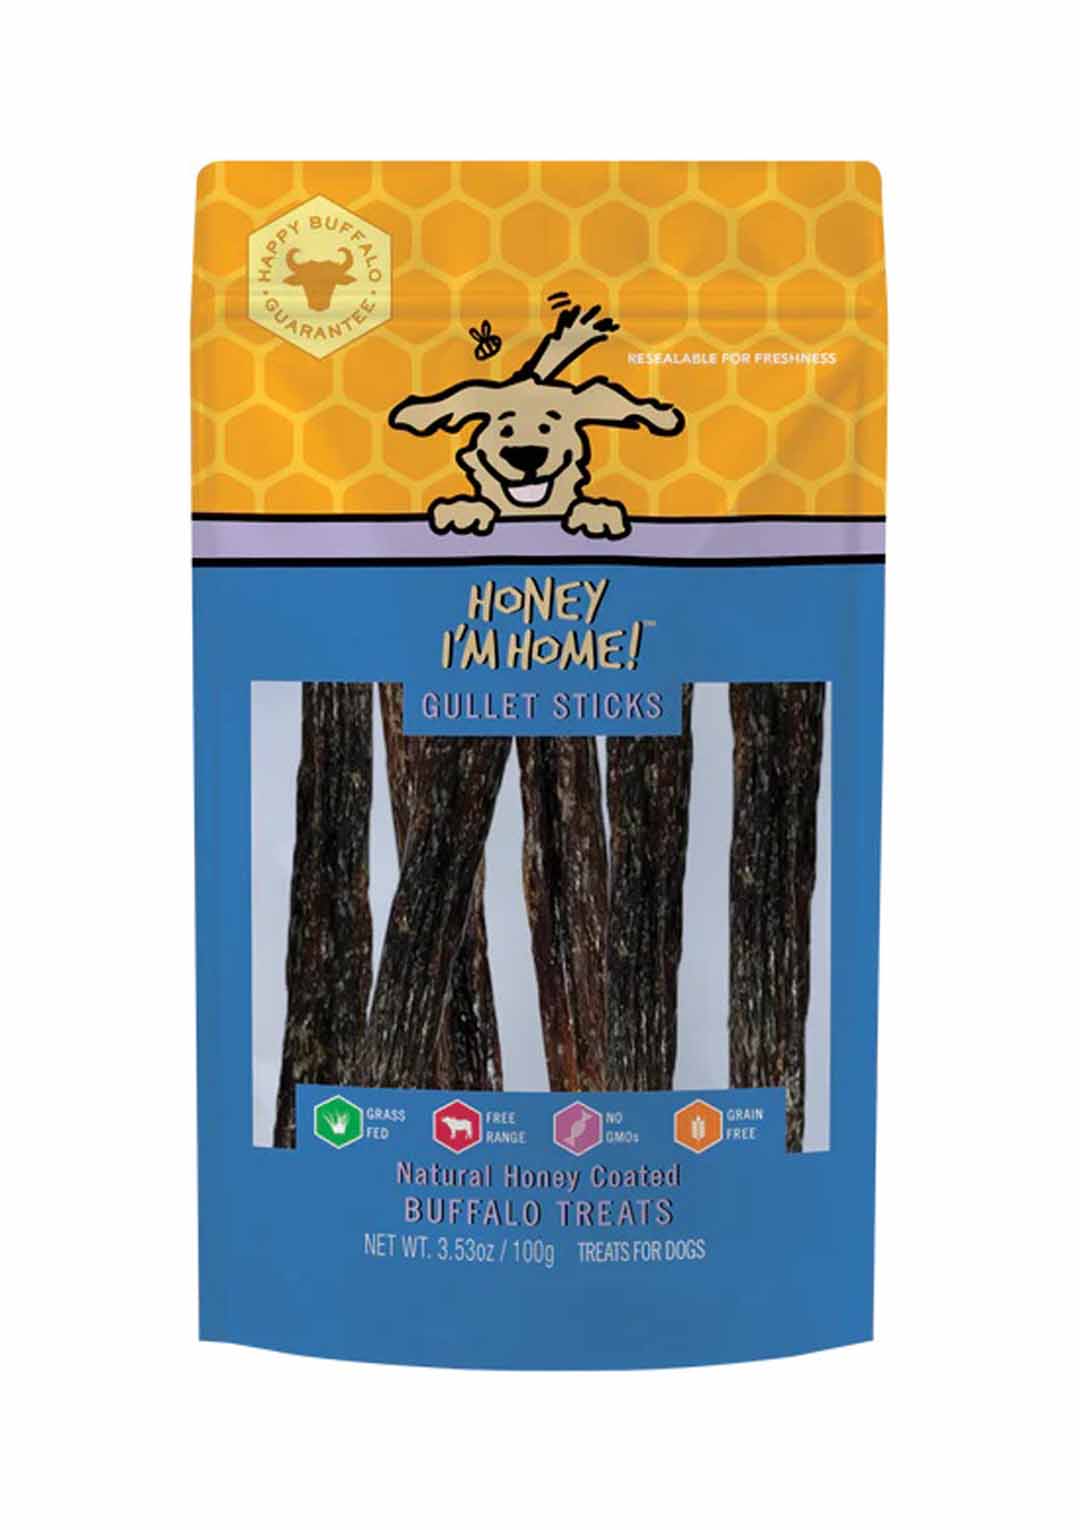 Honey IM Home Dog Natural Honey Coated Buffalo Treats Gullet Sticks 3.53Oz - Pet Supplies - Honey Im home